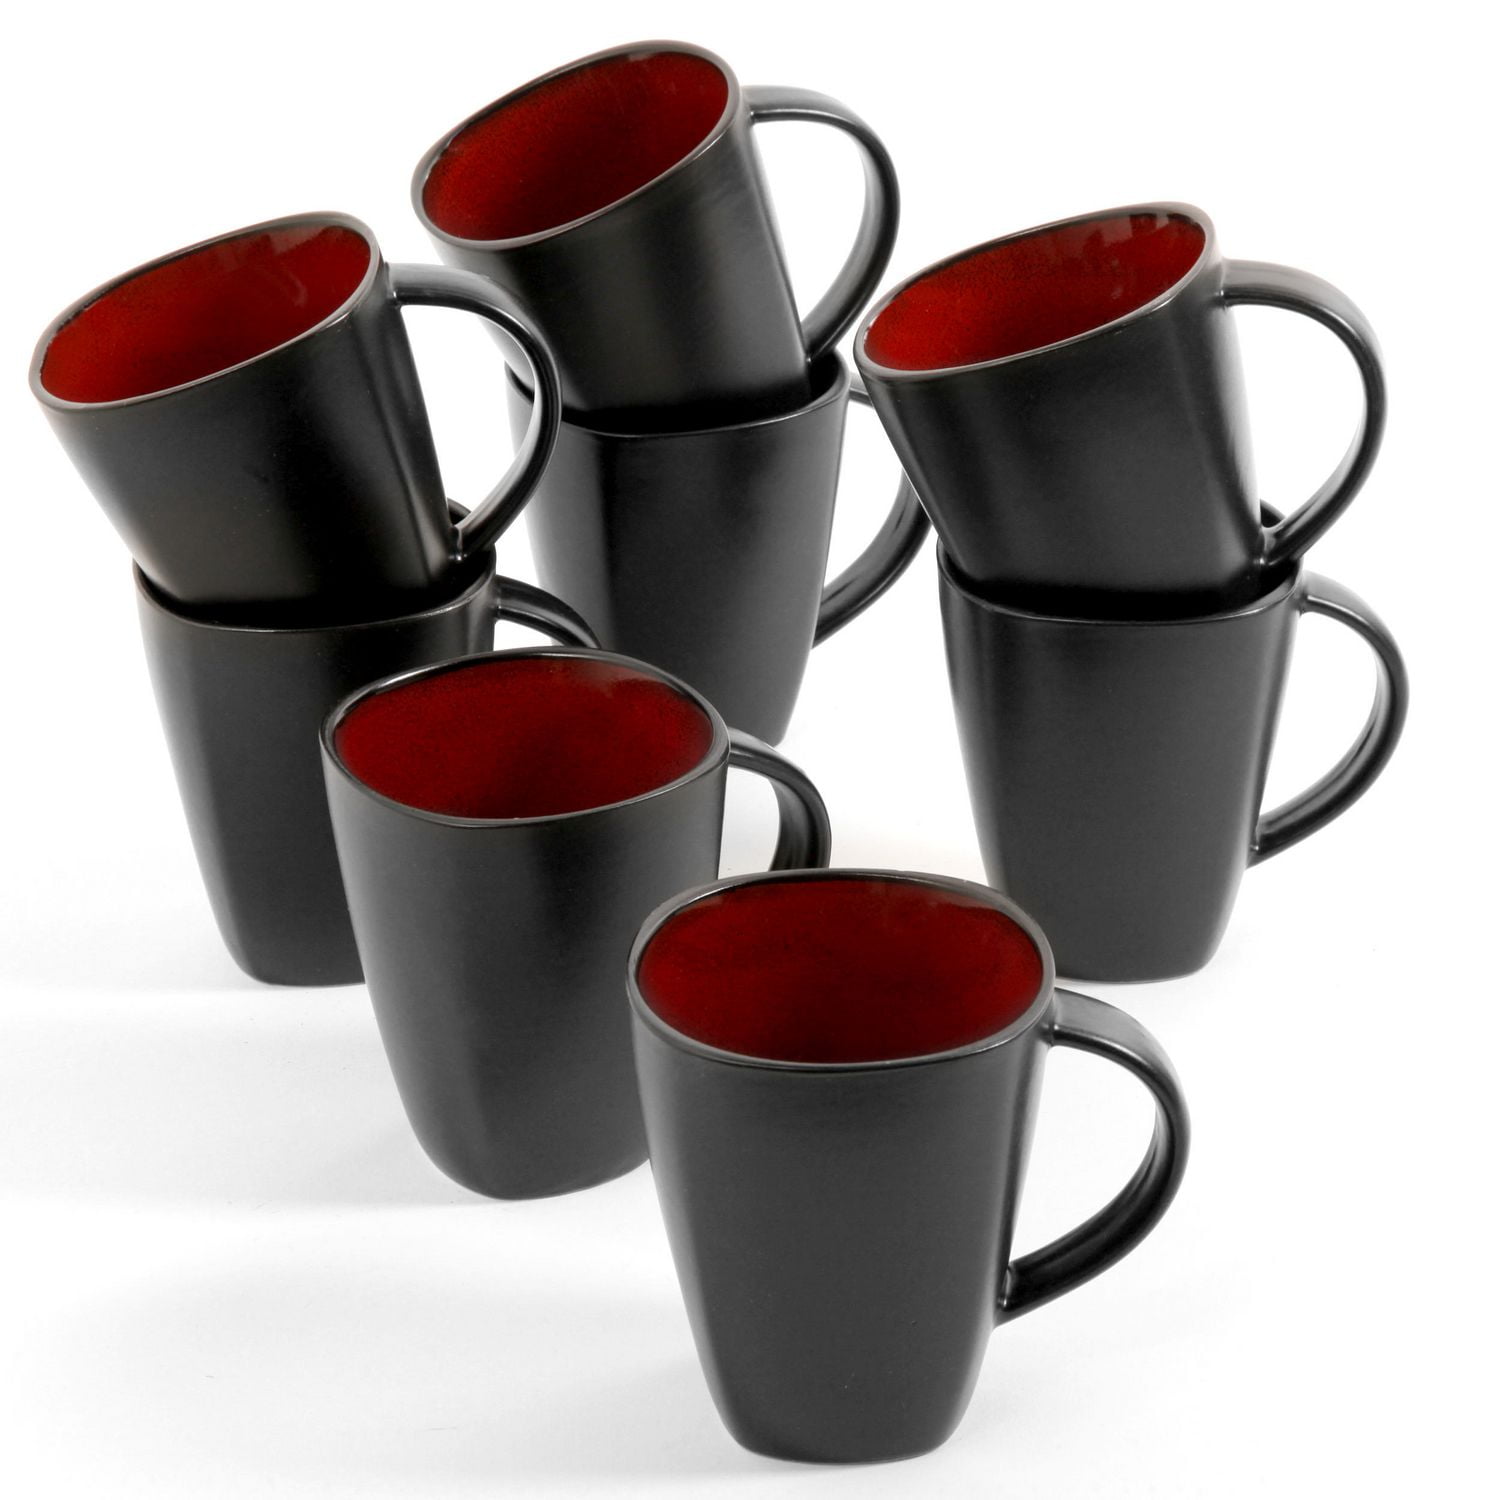 Galvanox Soho Electric Ceramic 12oz Coffee Mug with Warmer - Best Mom - Makes Great Gift